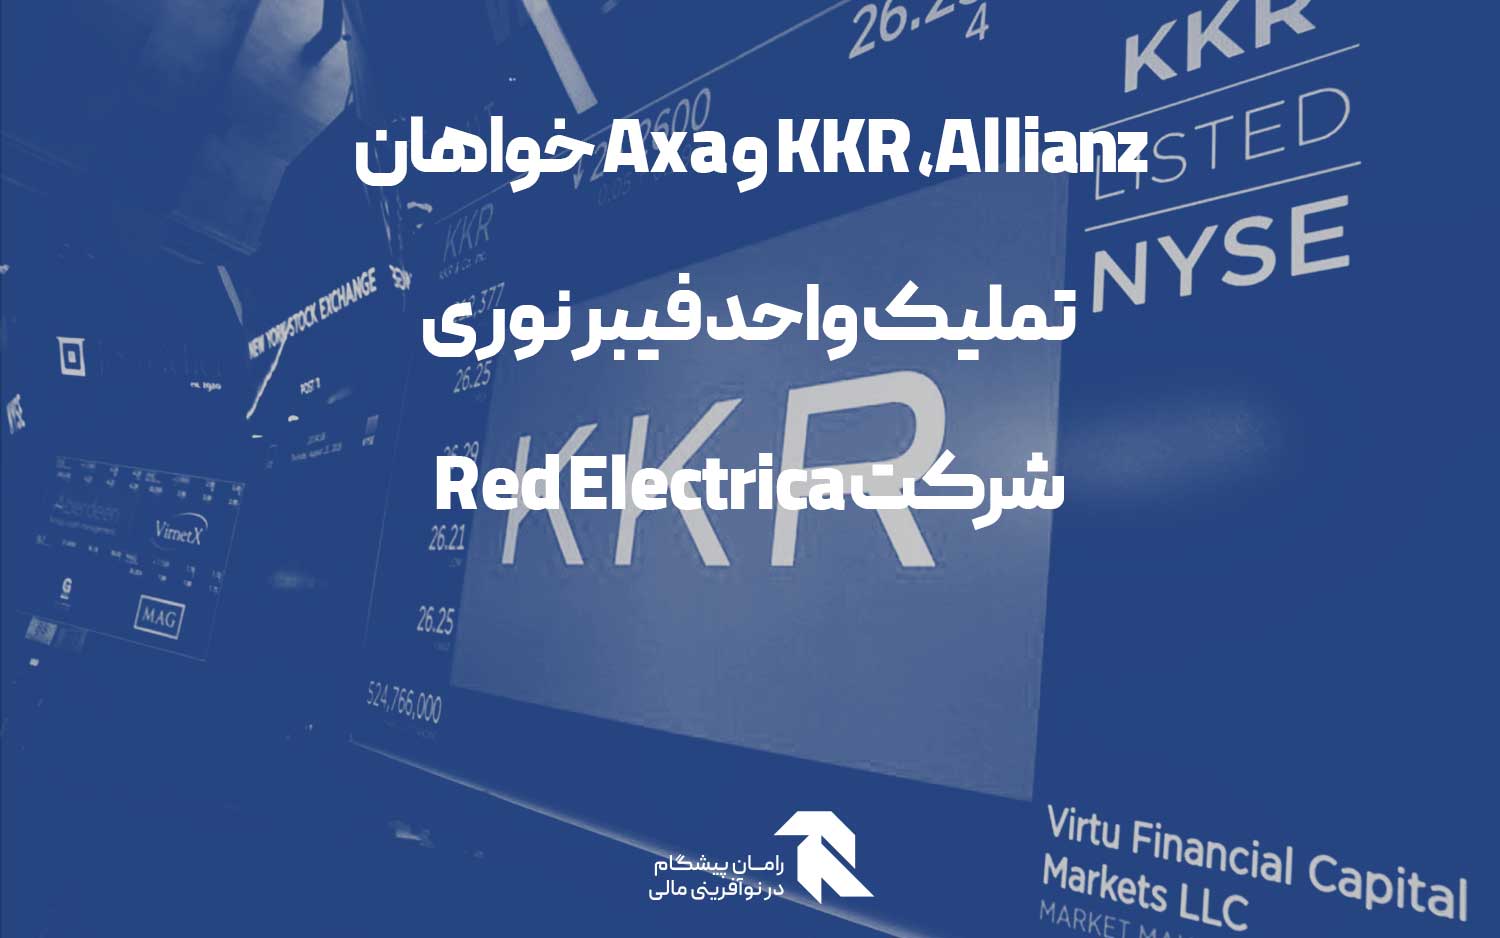 KKR ،Allianz و Axa خواهان تملیک واحد فیبر نوری شرکت Red Electrica